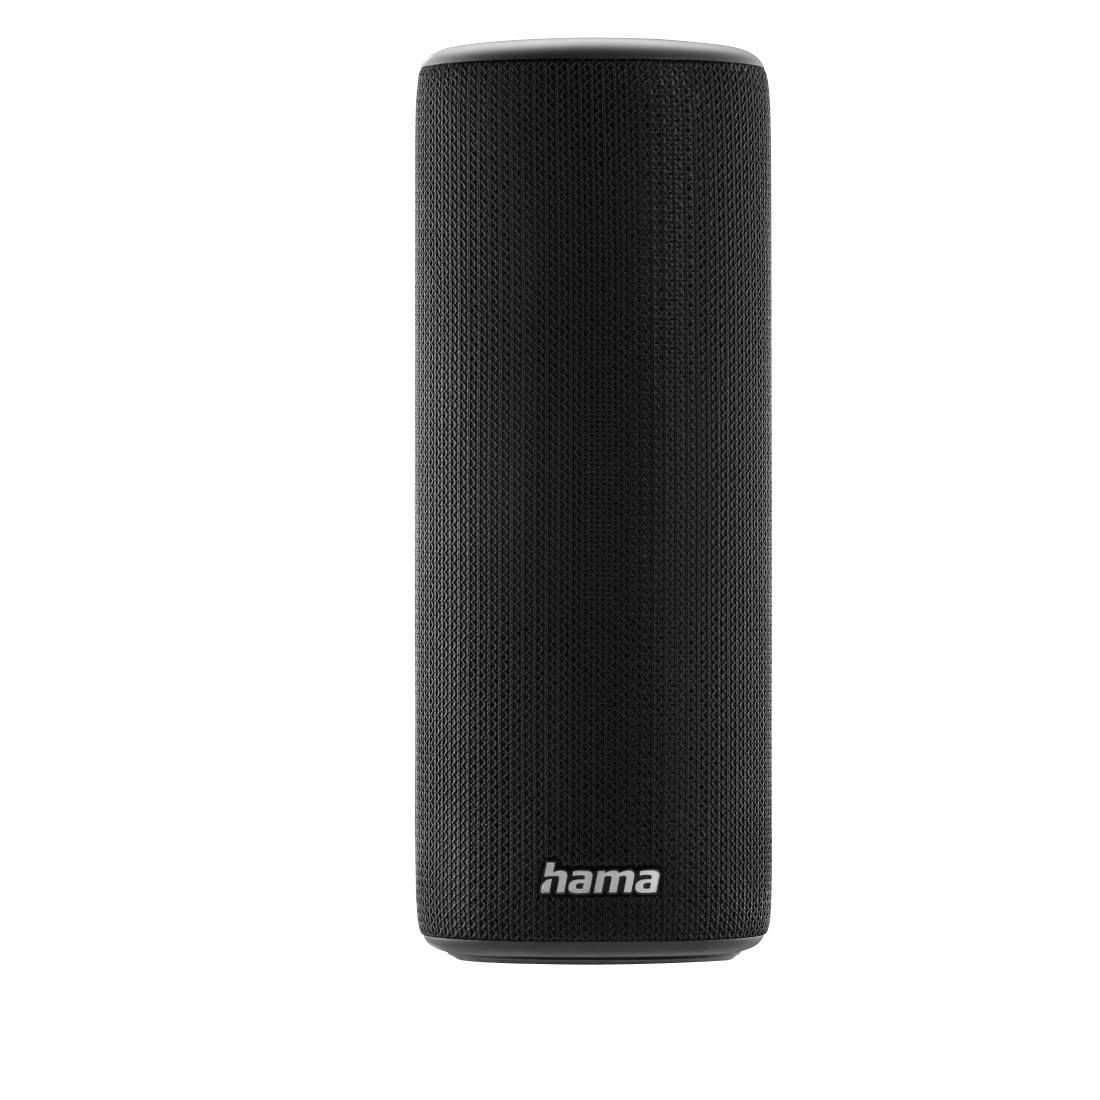 Hama 188202 W128825813 Pipe 3.0 Stereo Portable 